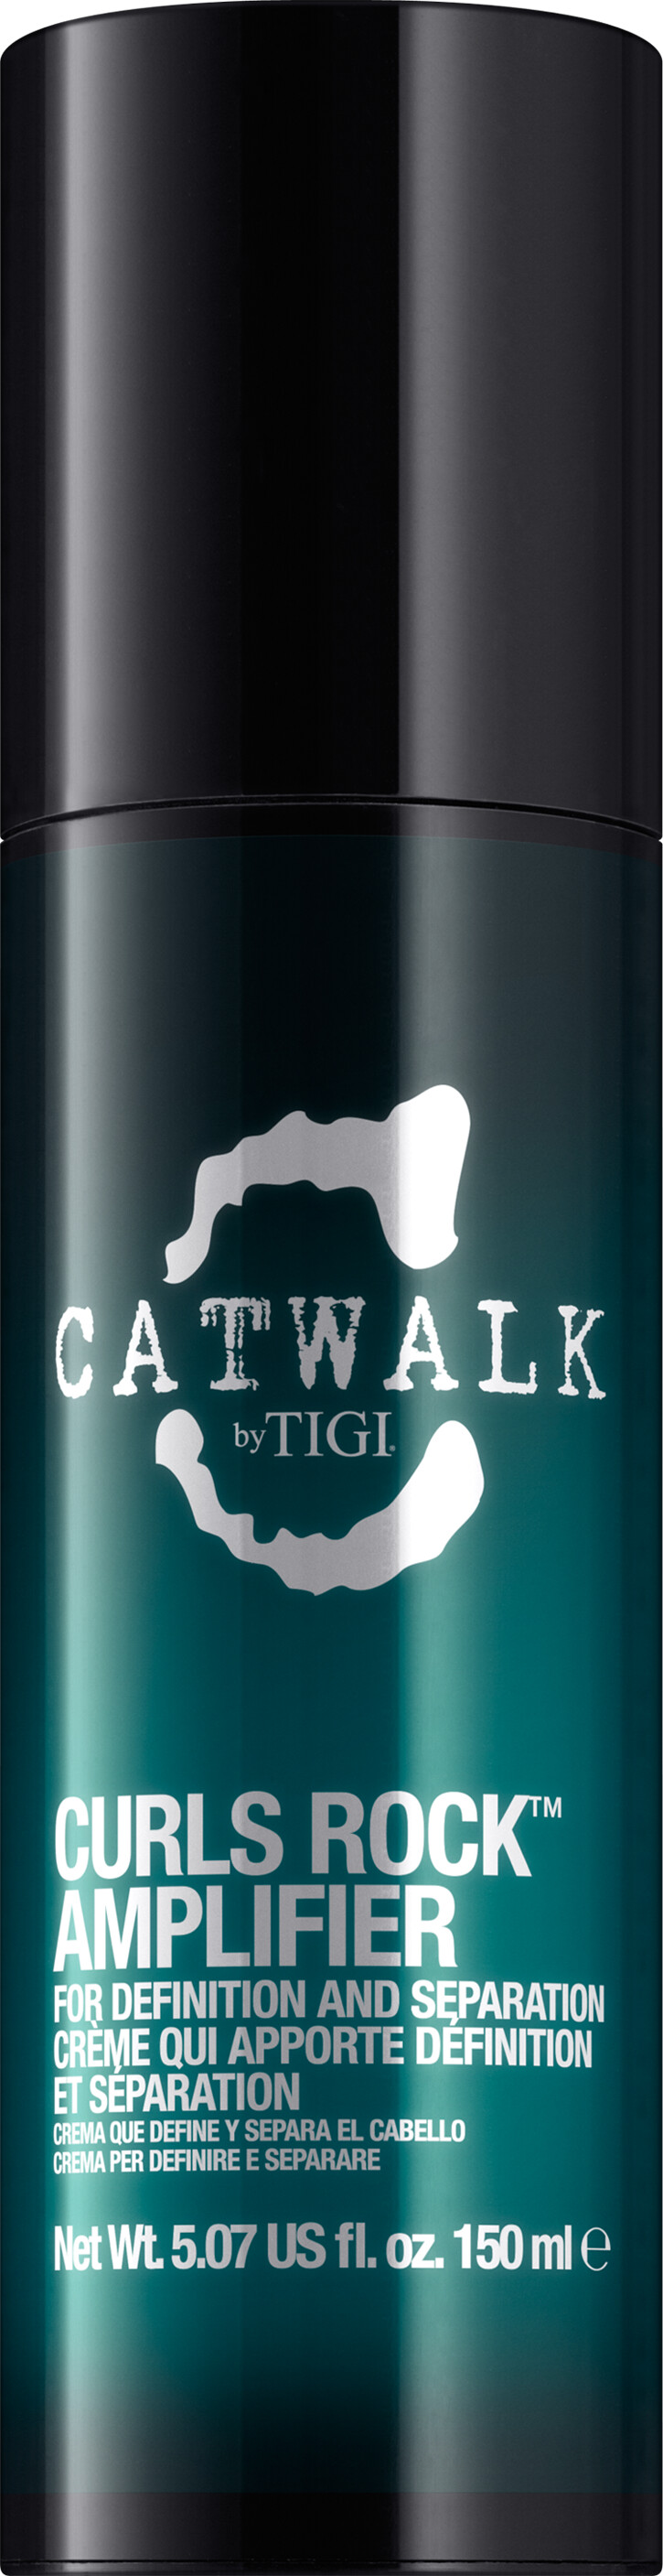 TIGI Catwalk Curls Rock Amplifier 150ml